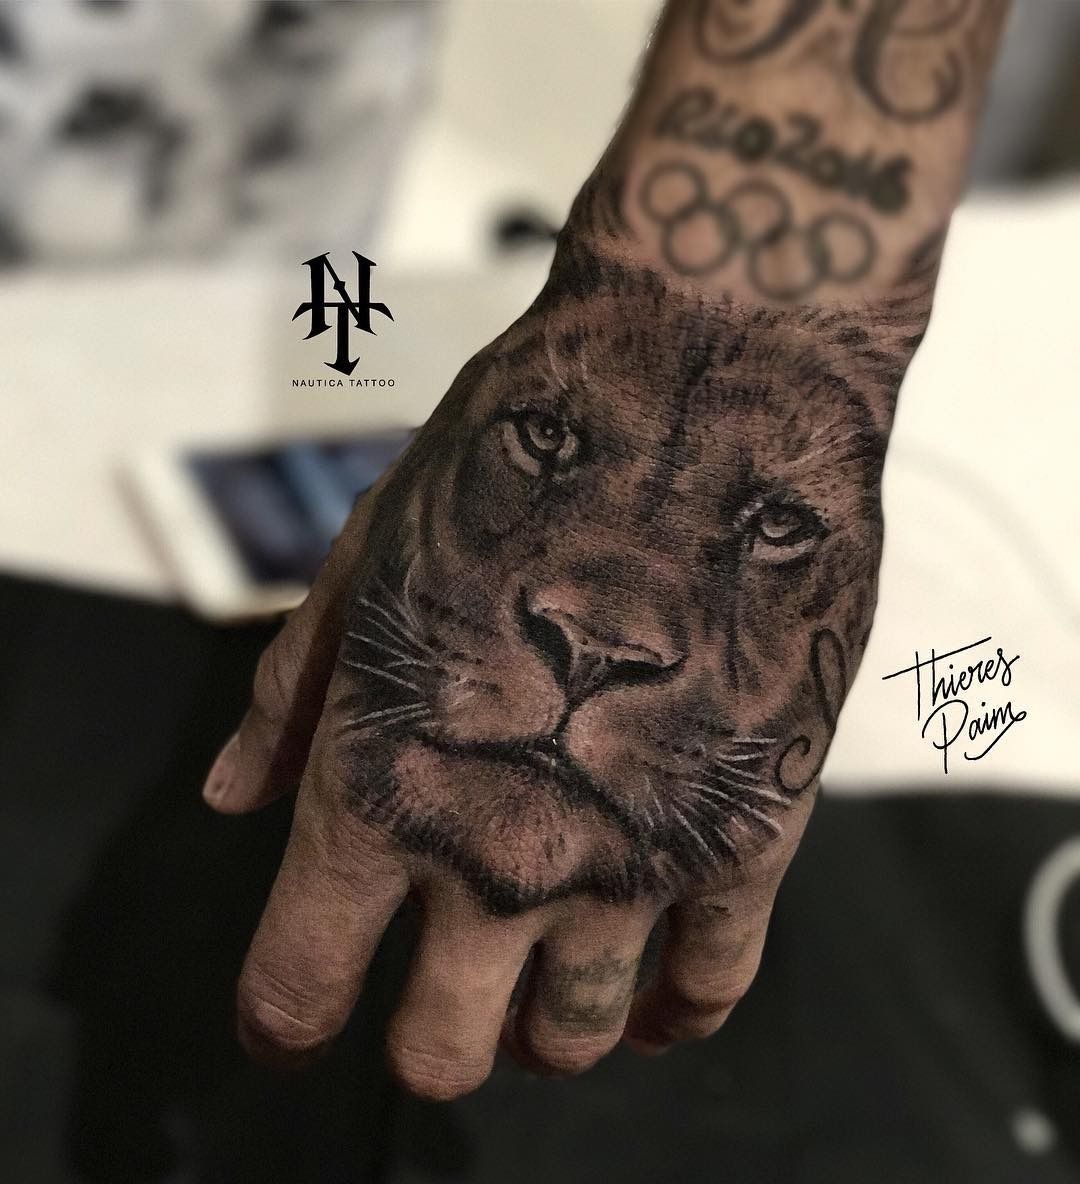 Neymar Tattoo on Hand.